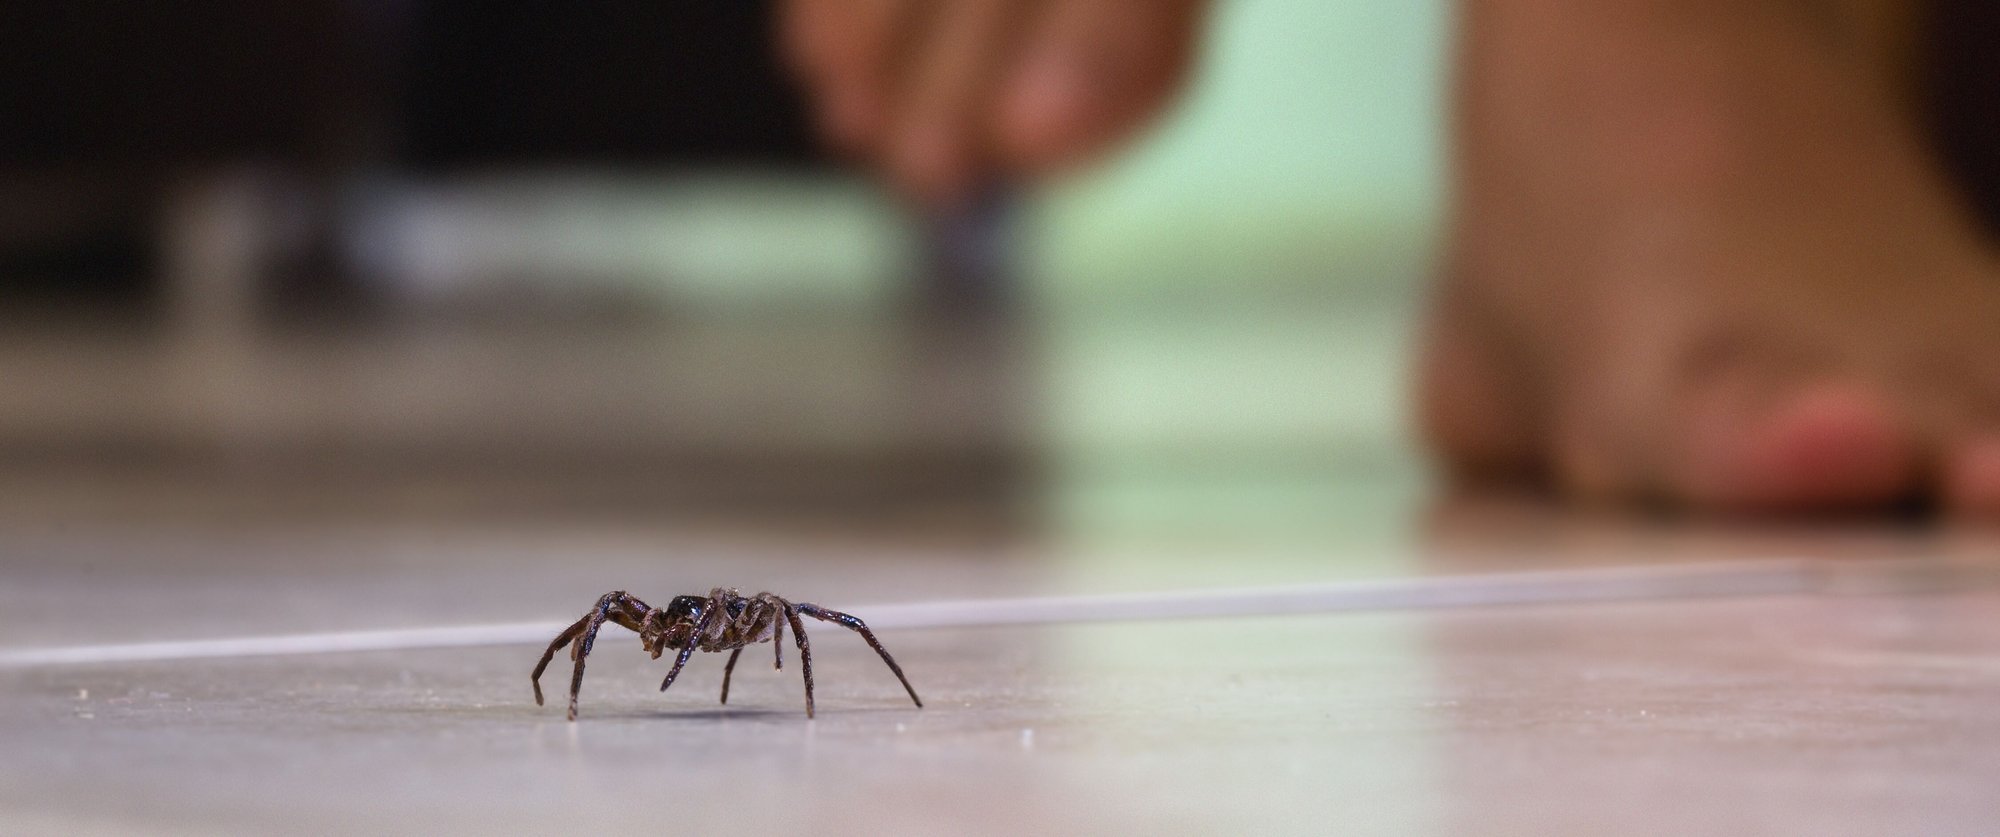 Spider On Residential Home Floor